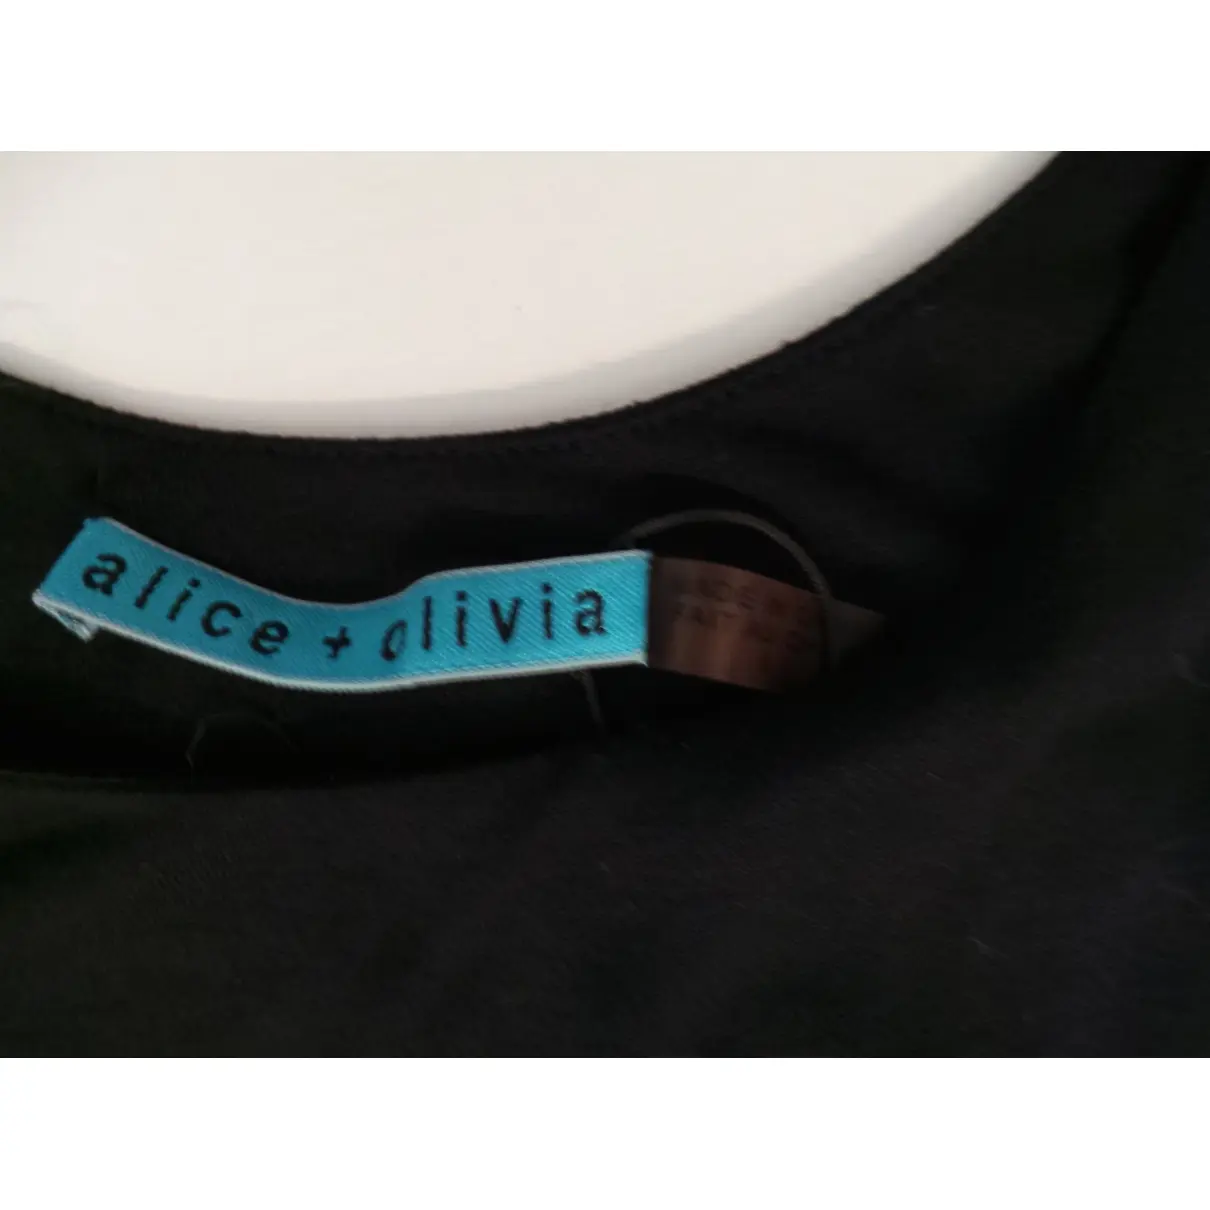 Buy Alice & Olivia Maxi dress online